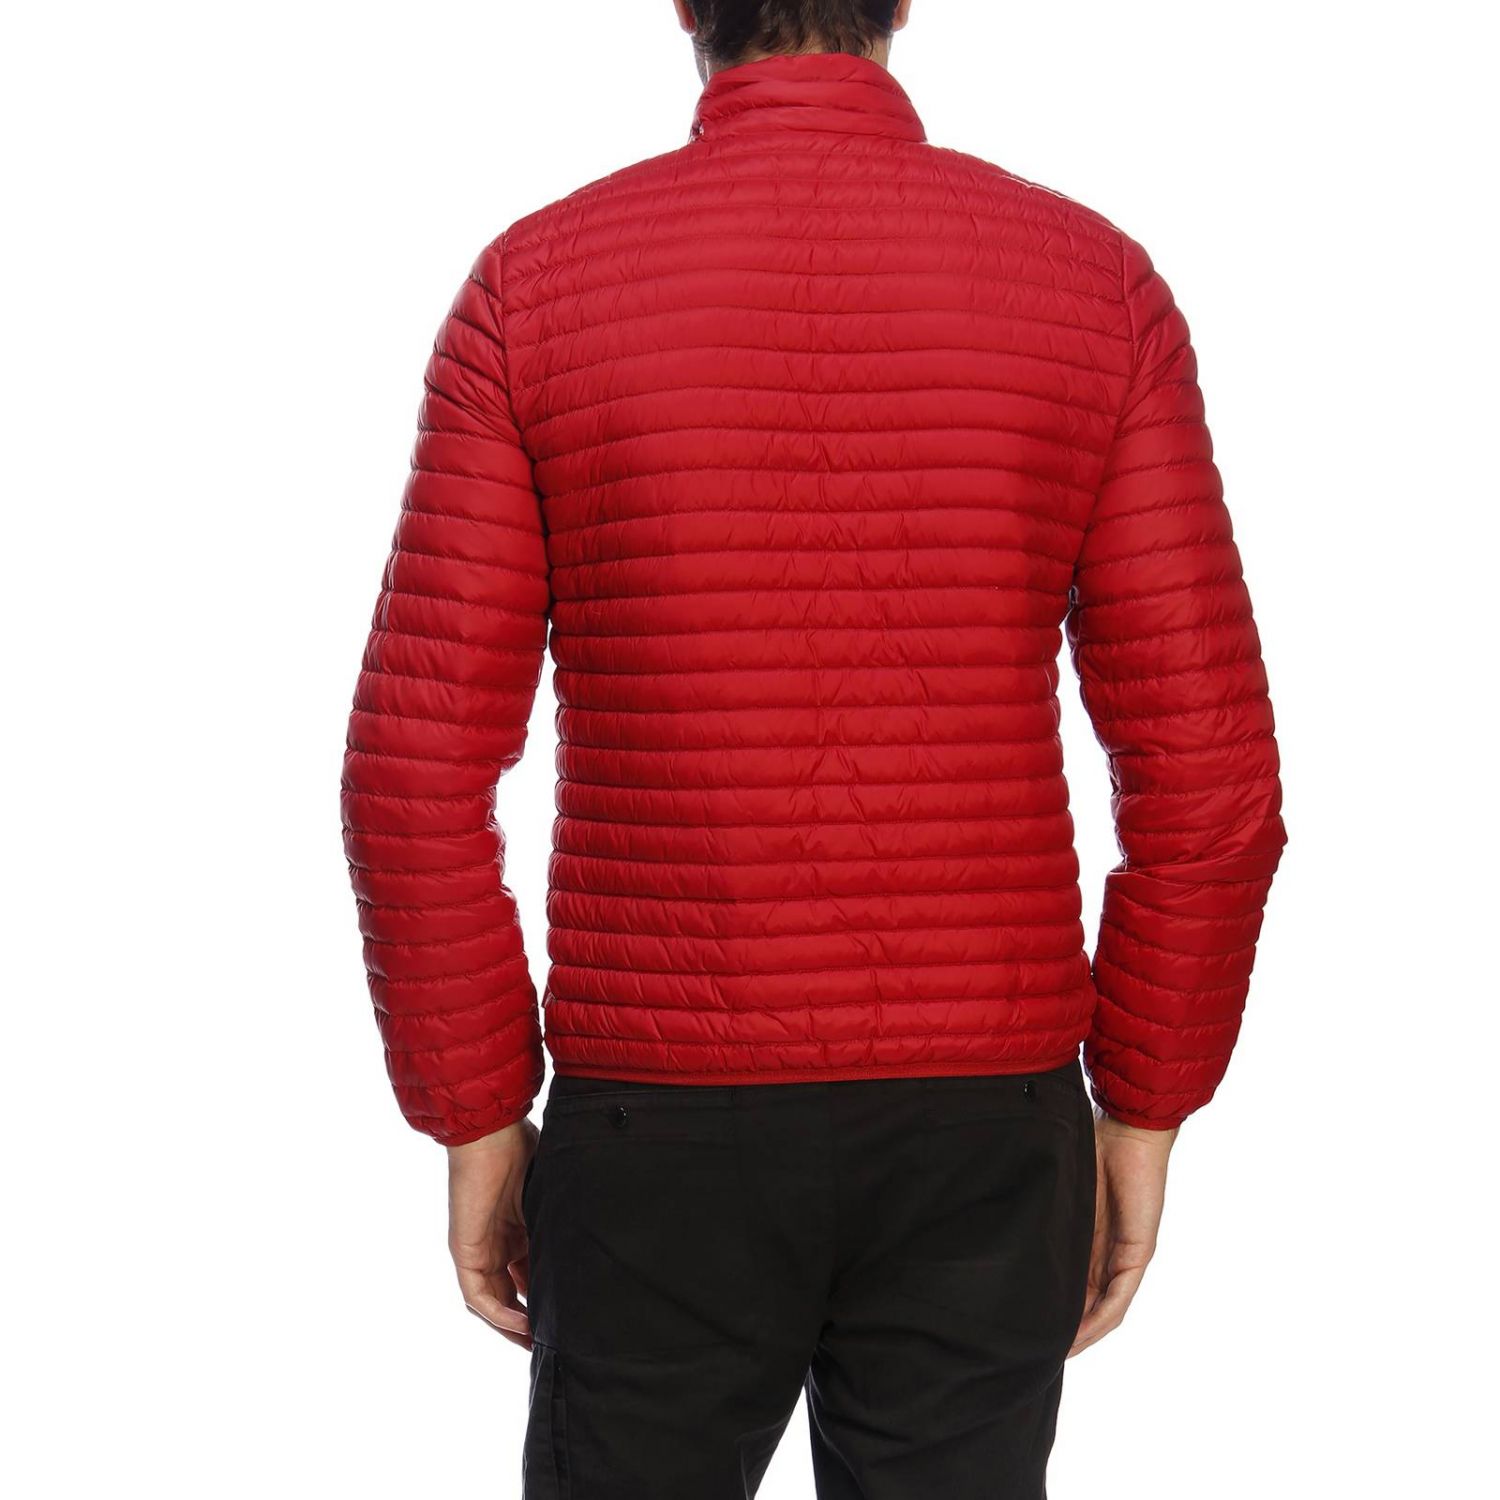 red armani jacket men's